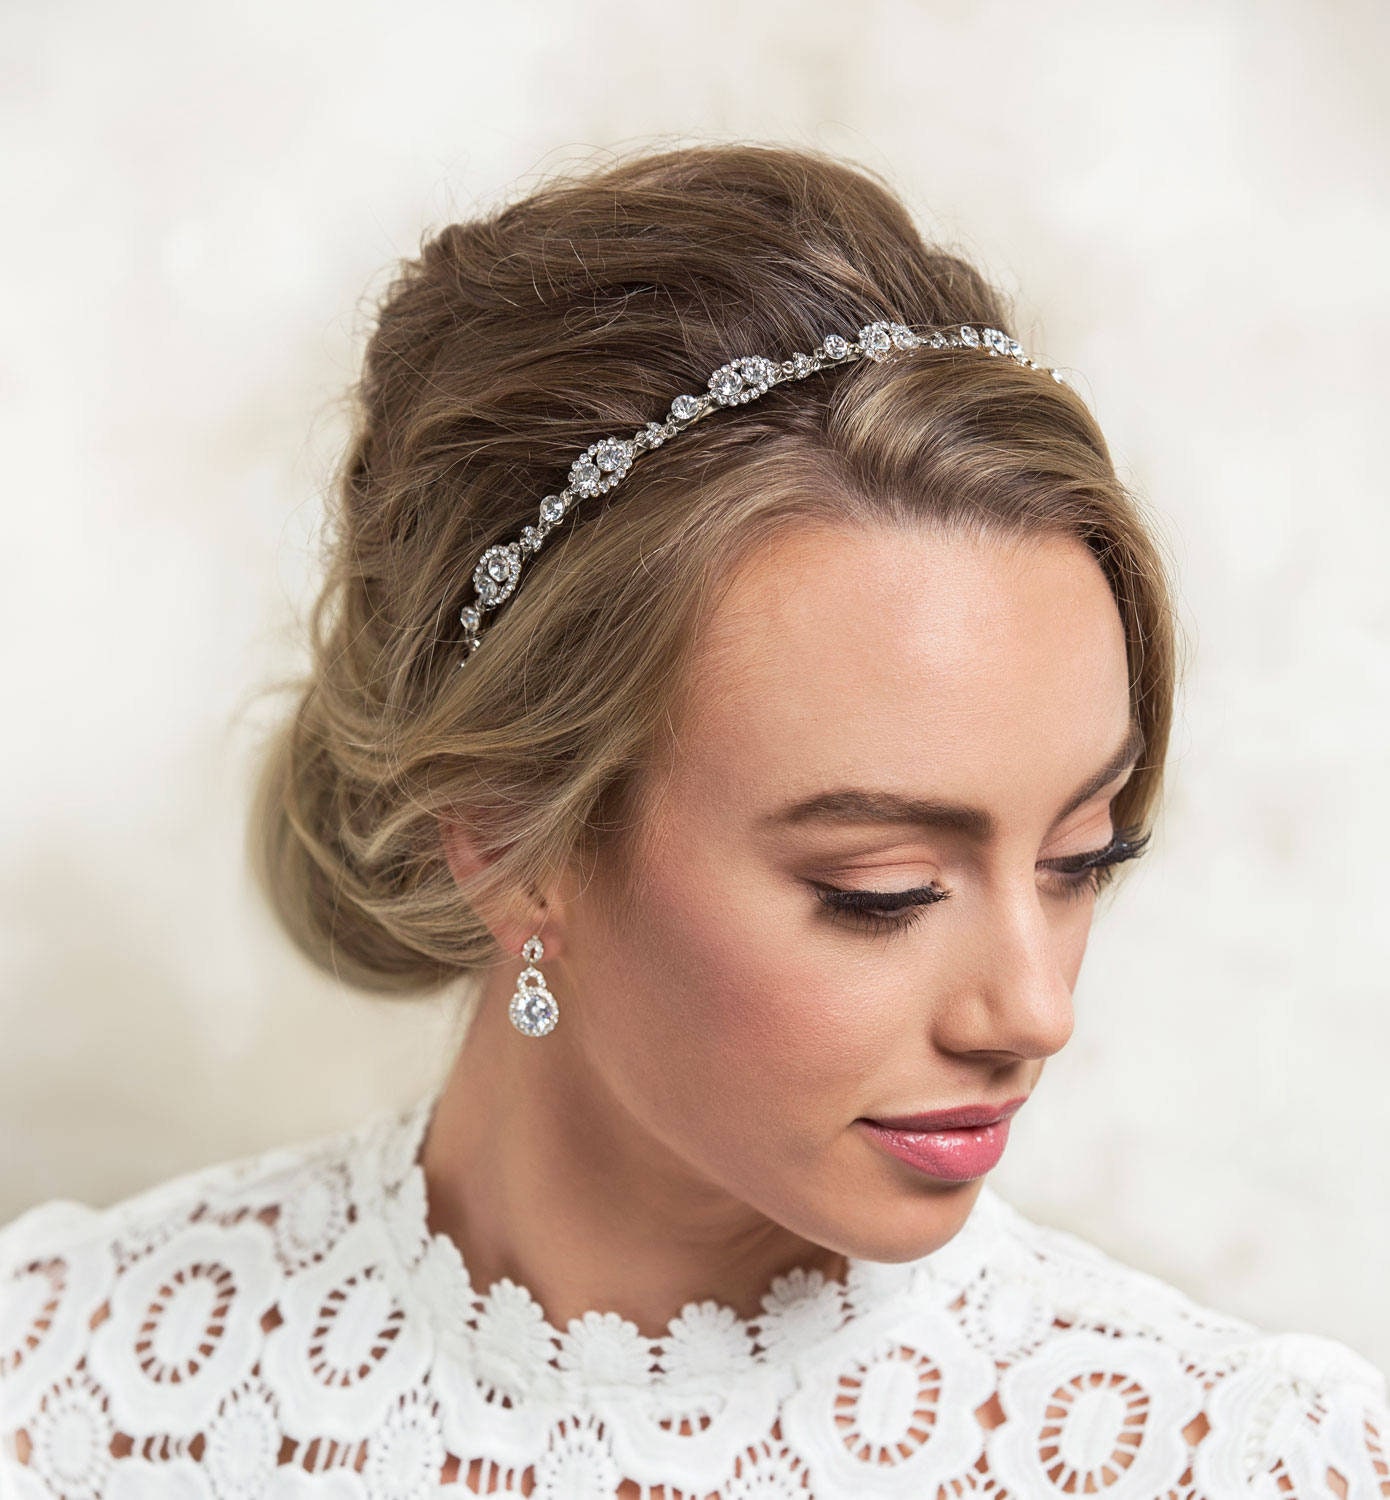 hoofdband haar sieraden haar accessoire kroon Accessoires Haaraccessoires Haarsieraden luxe handgemaakte bruiloft Dubbele bruids wit en zilver Cafuné hoofddeksel 